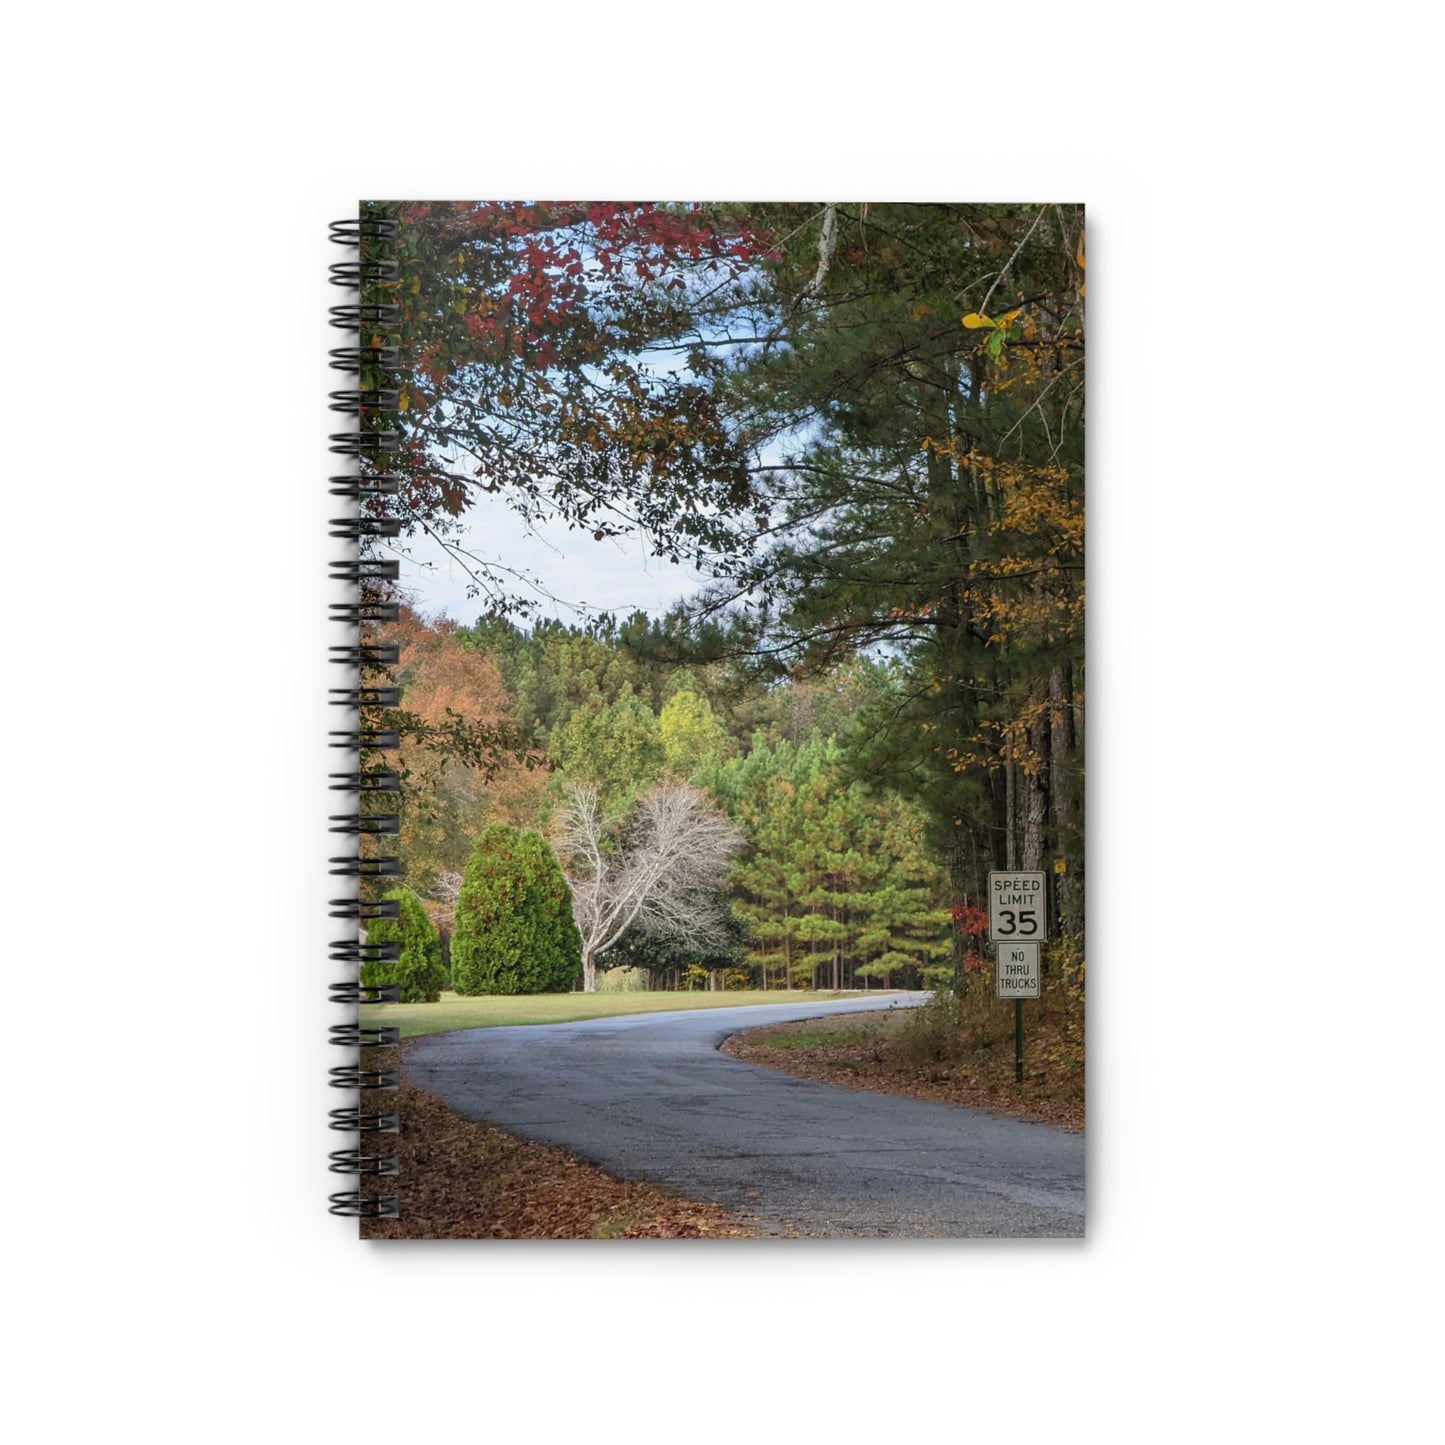 Monroe GA Spiral Notebook October